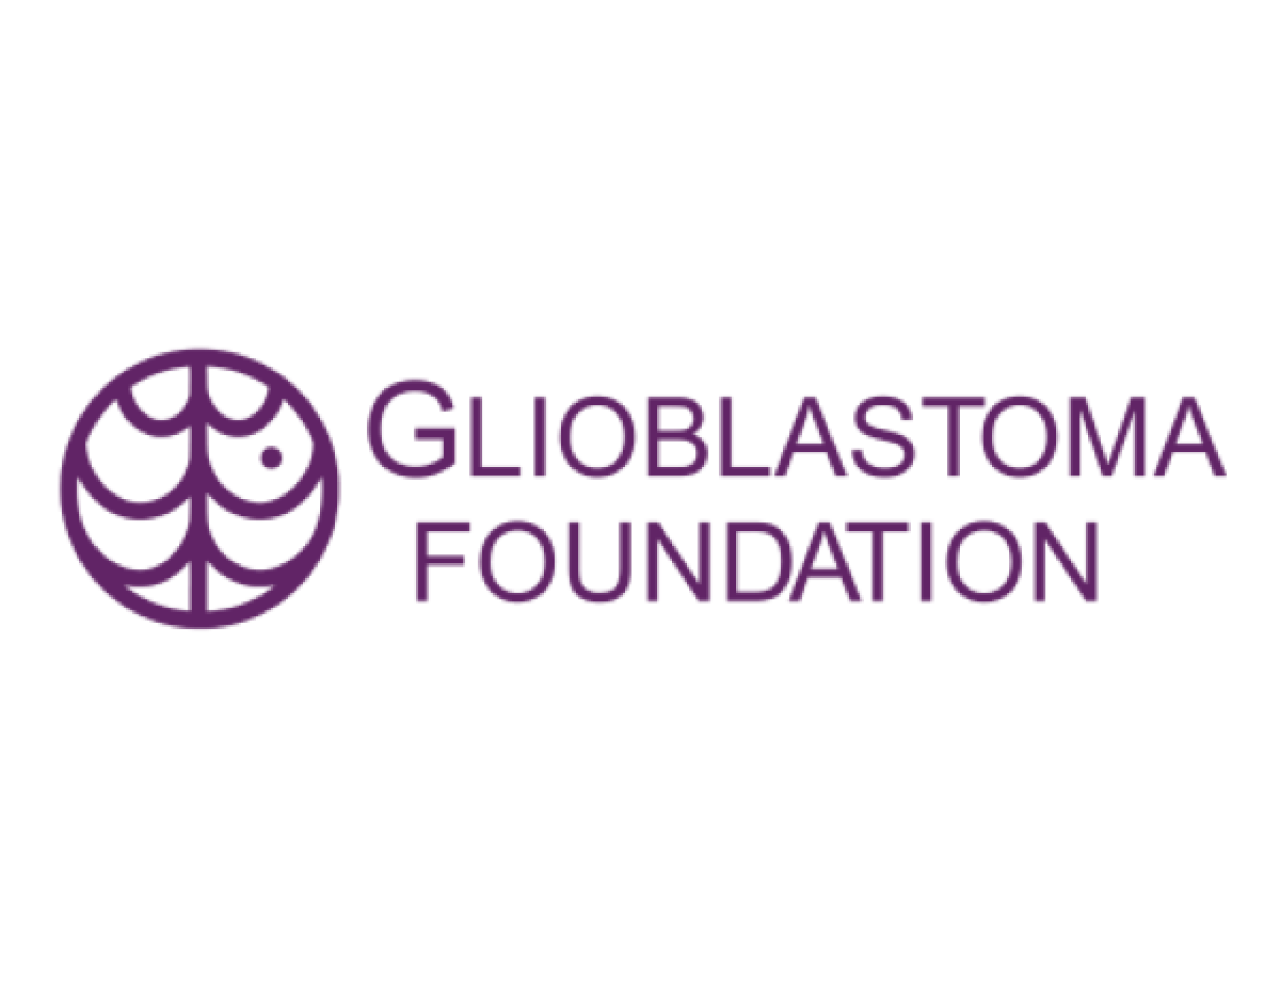 glioblastoma foundation logo.